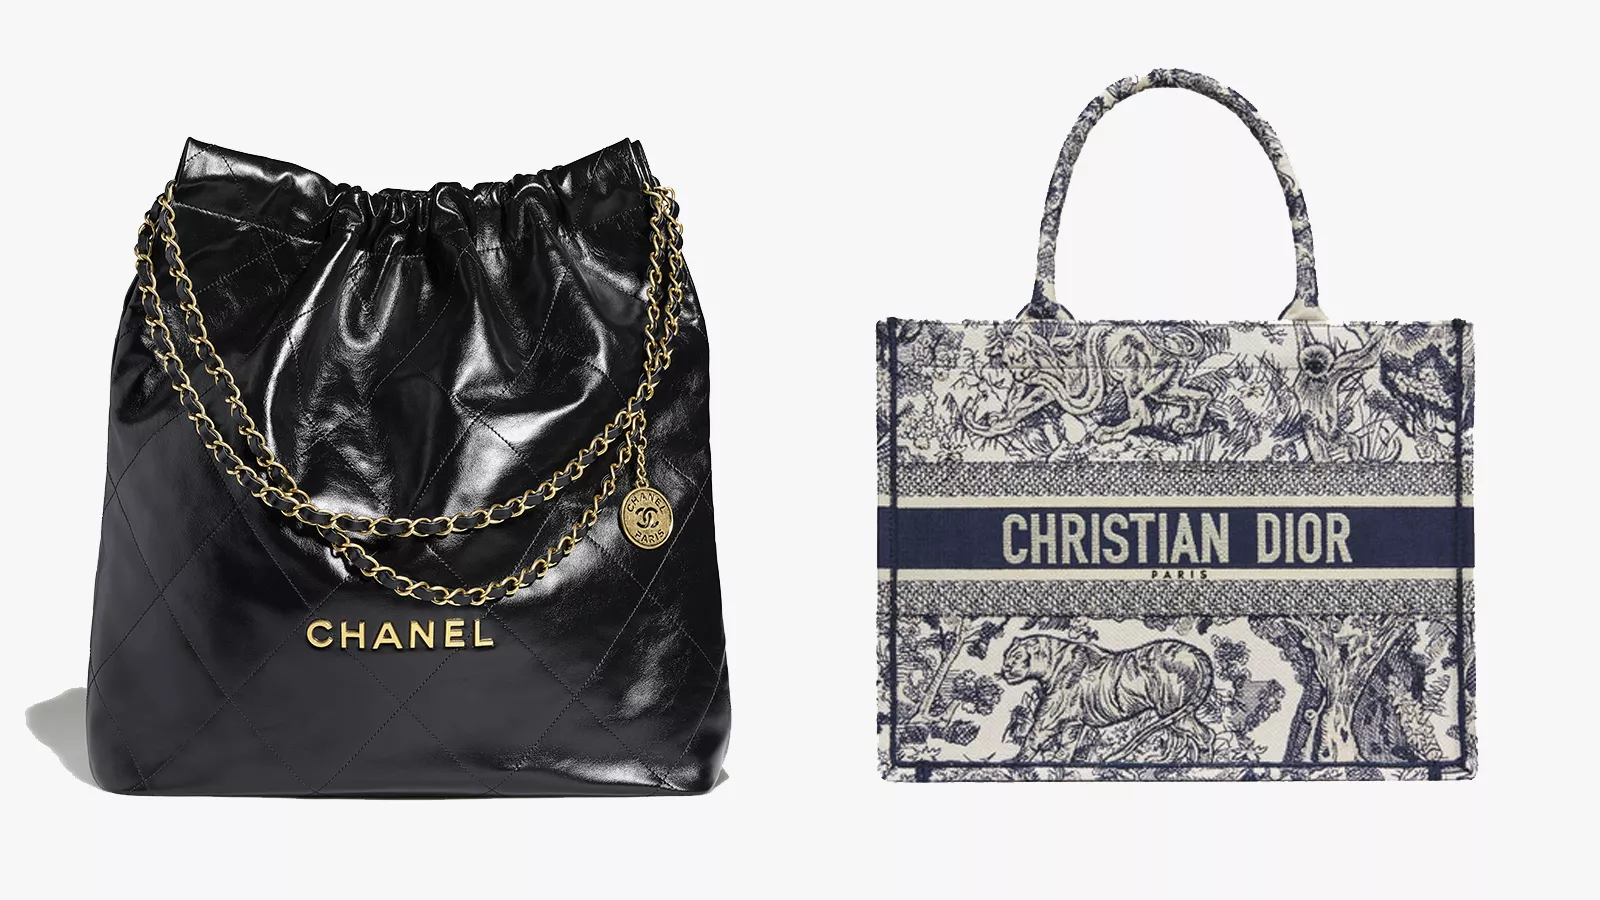 Женская минисумка Christian Dior за 34000 рублей на SellFashion